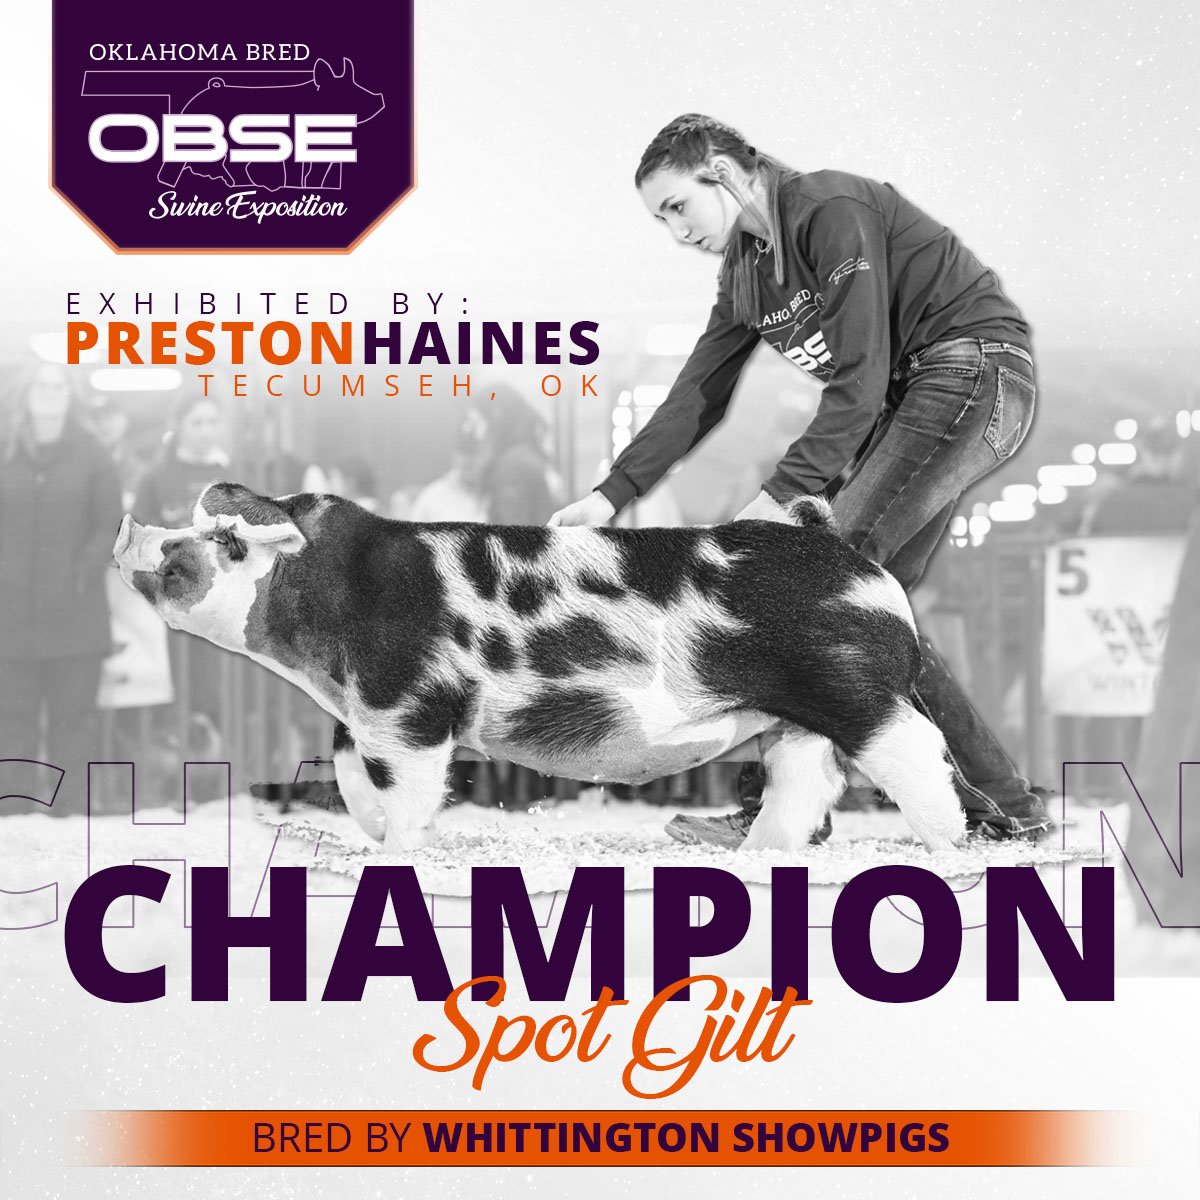 OBSE23_ChampionSpot.jpg